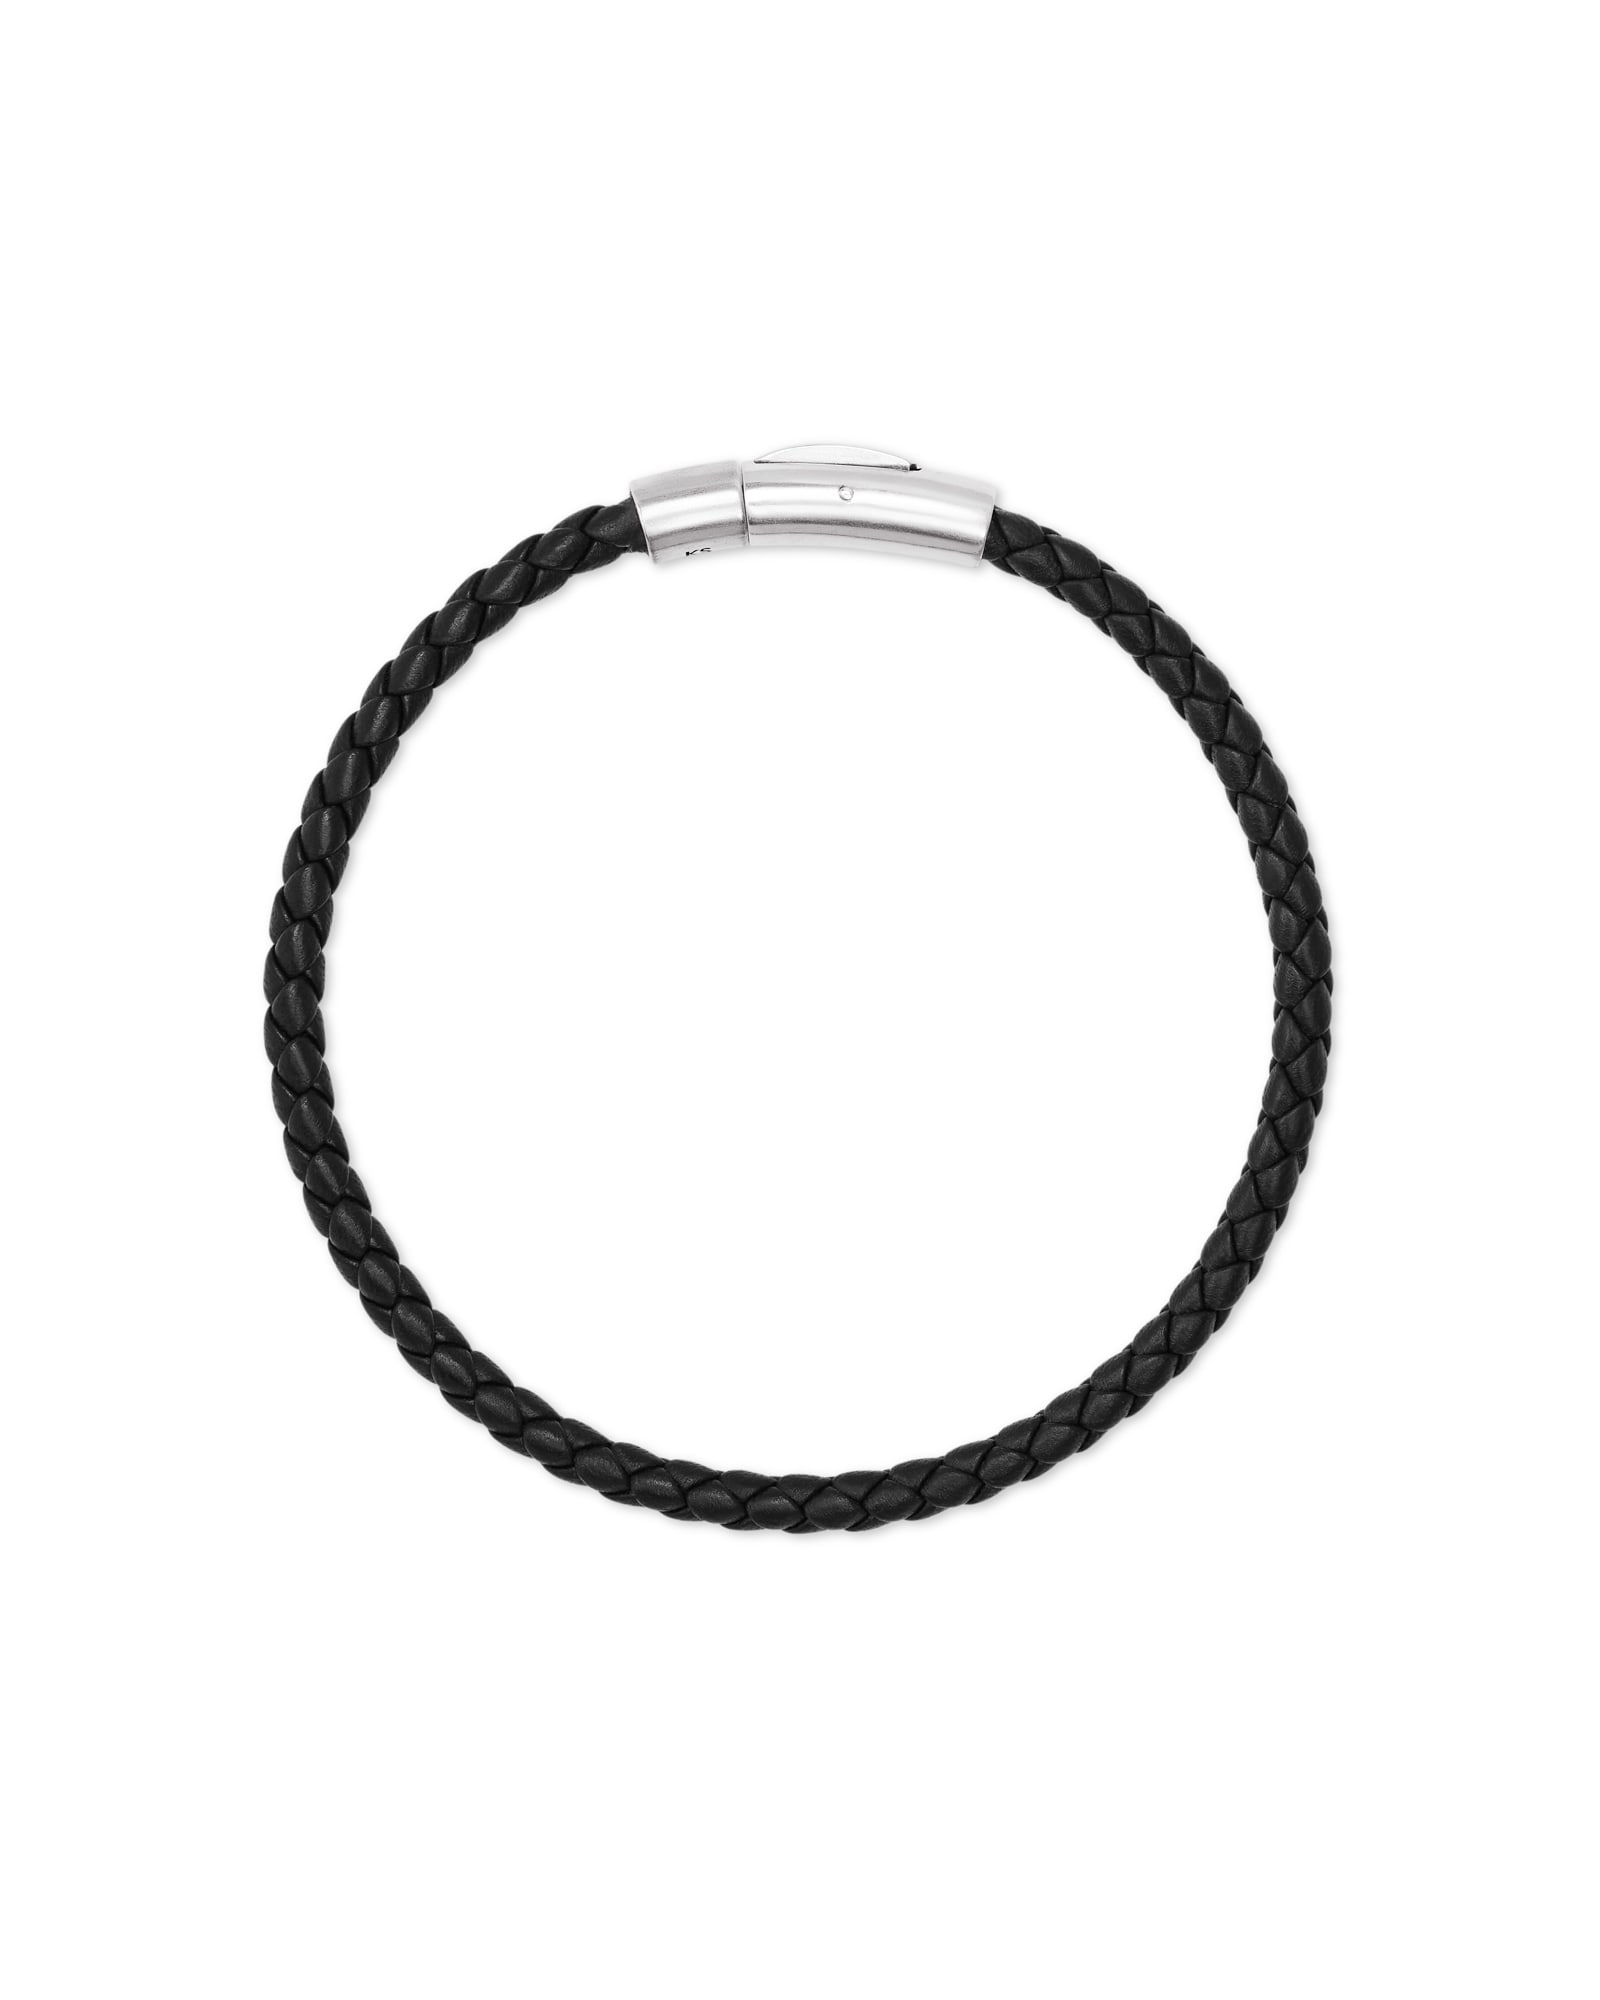 jewelry bracelets 3x Black Bracelet Cord Nylon Cord 3mm Leather